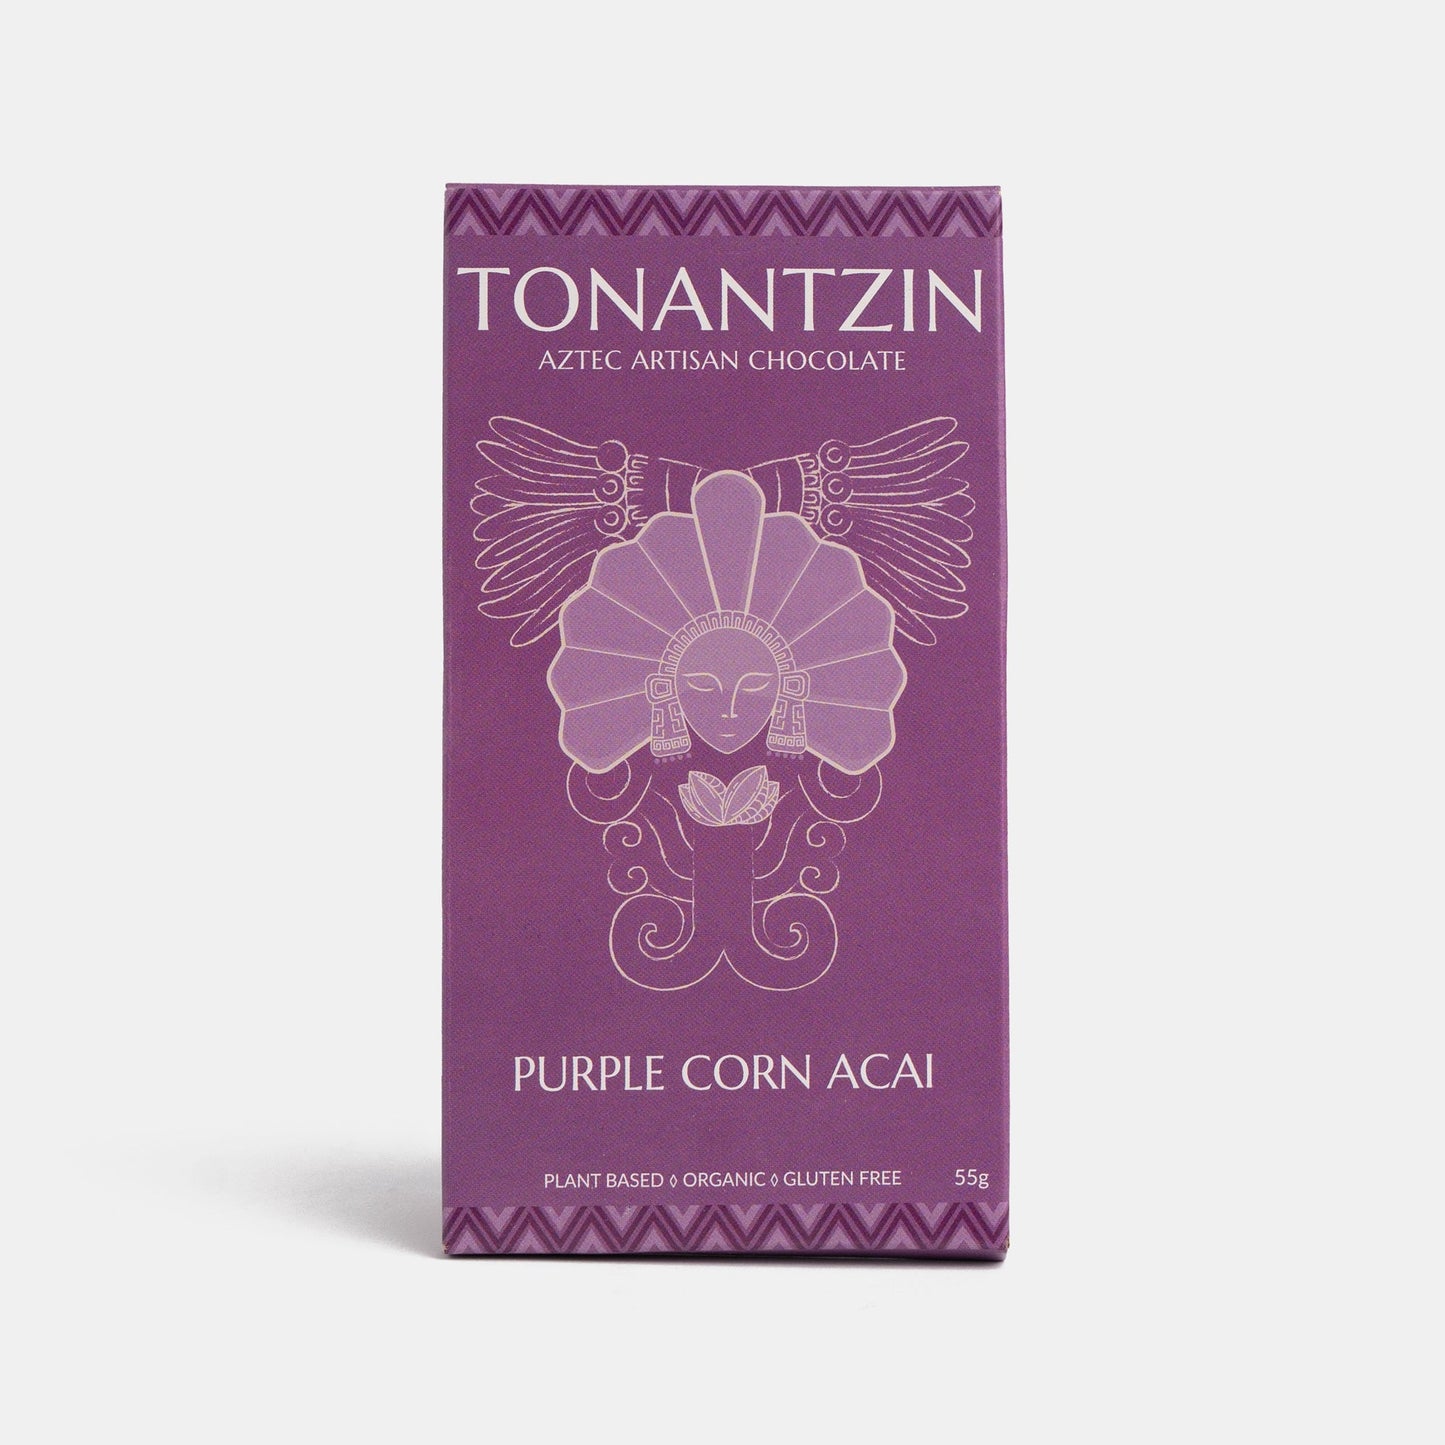 Small Batch Providore - Tonantzin Chocolate - Purple Corn Acai - front view